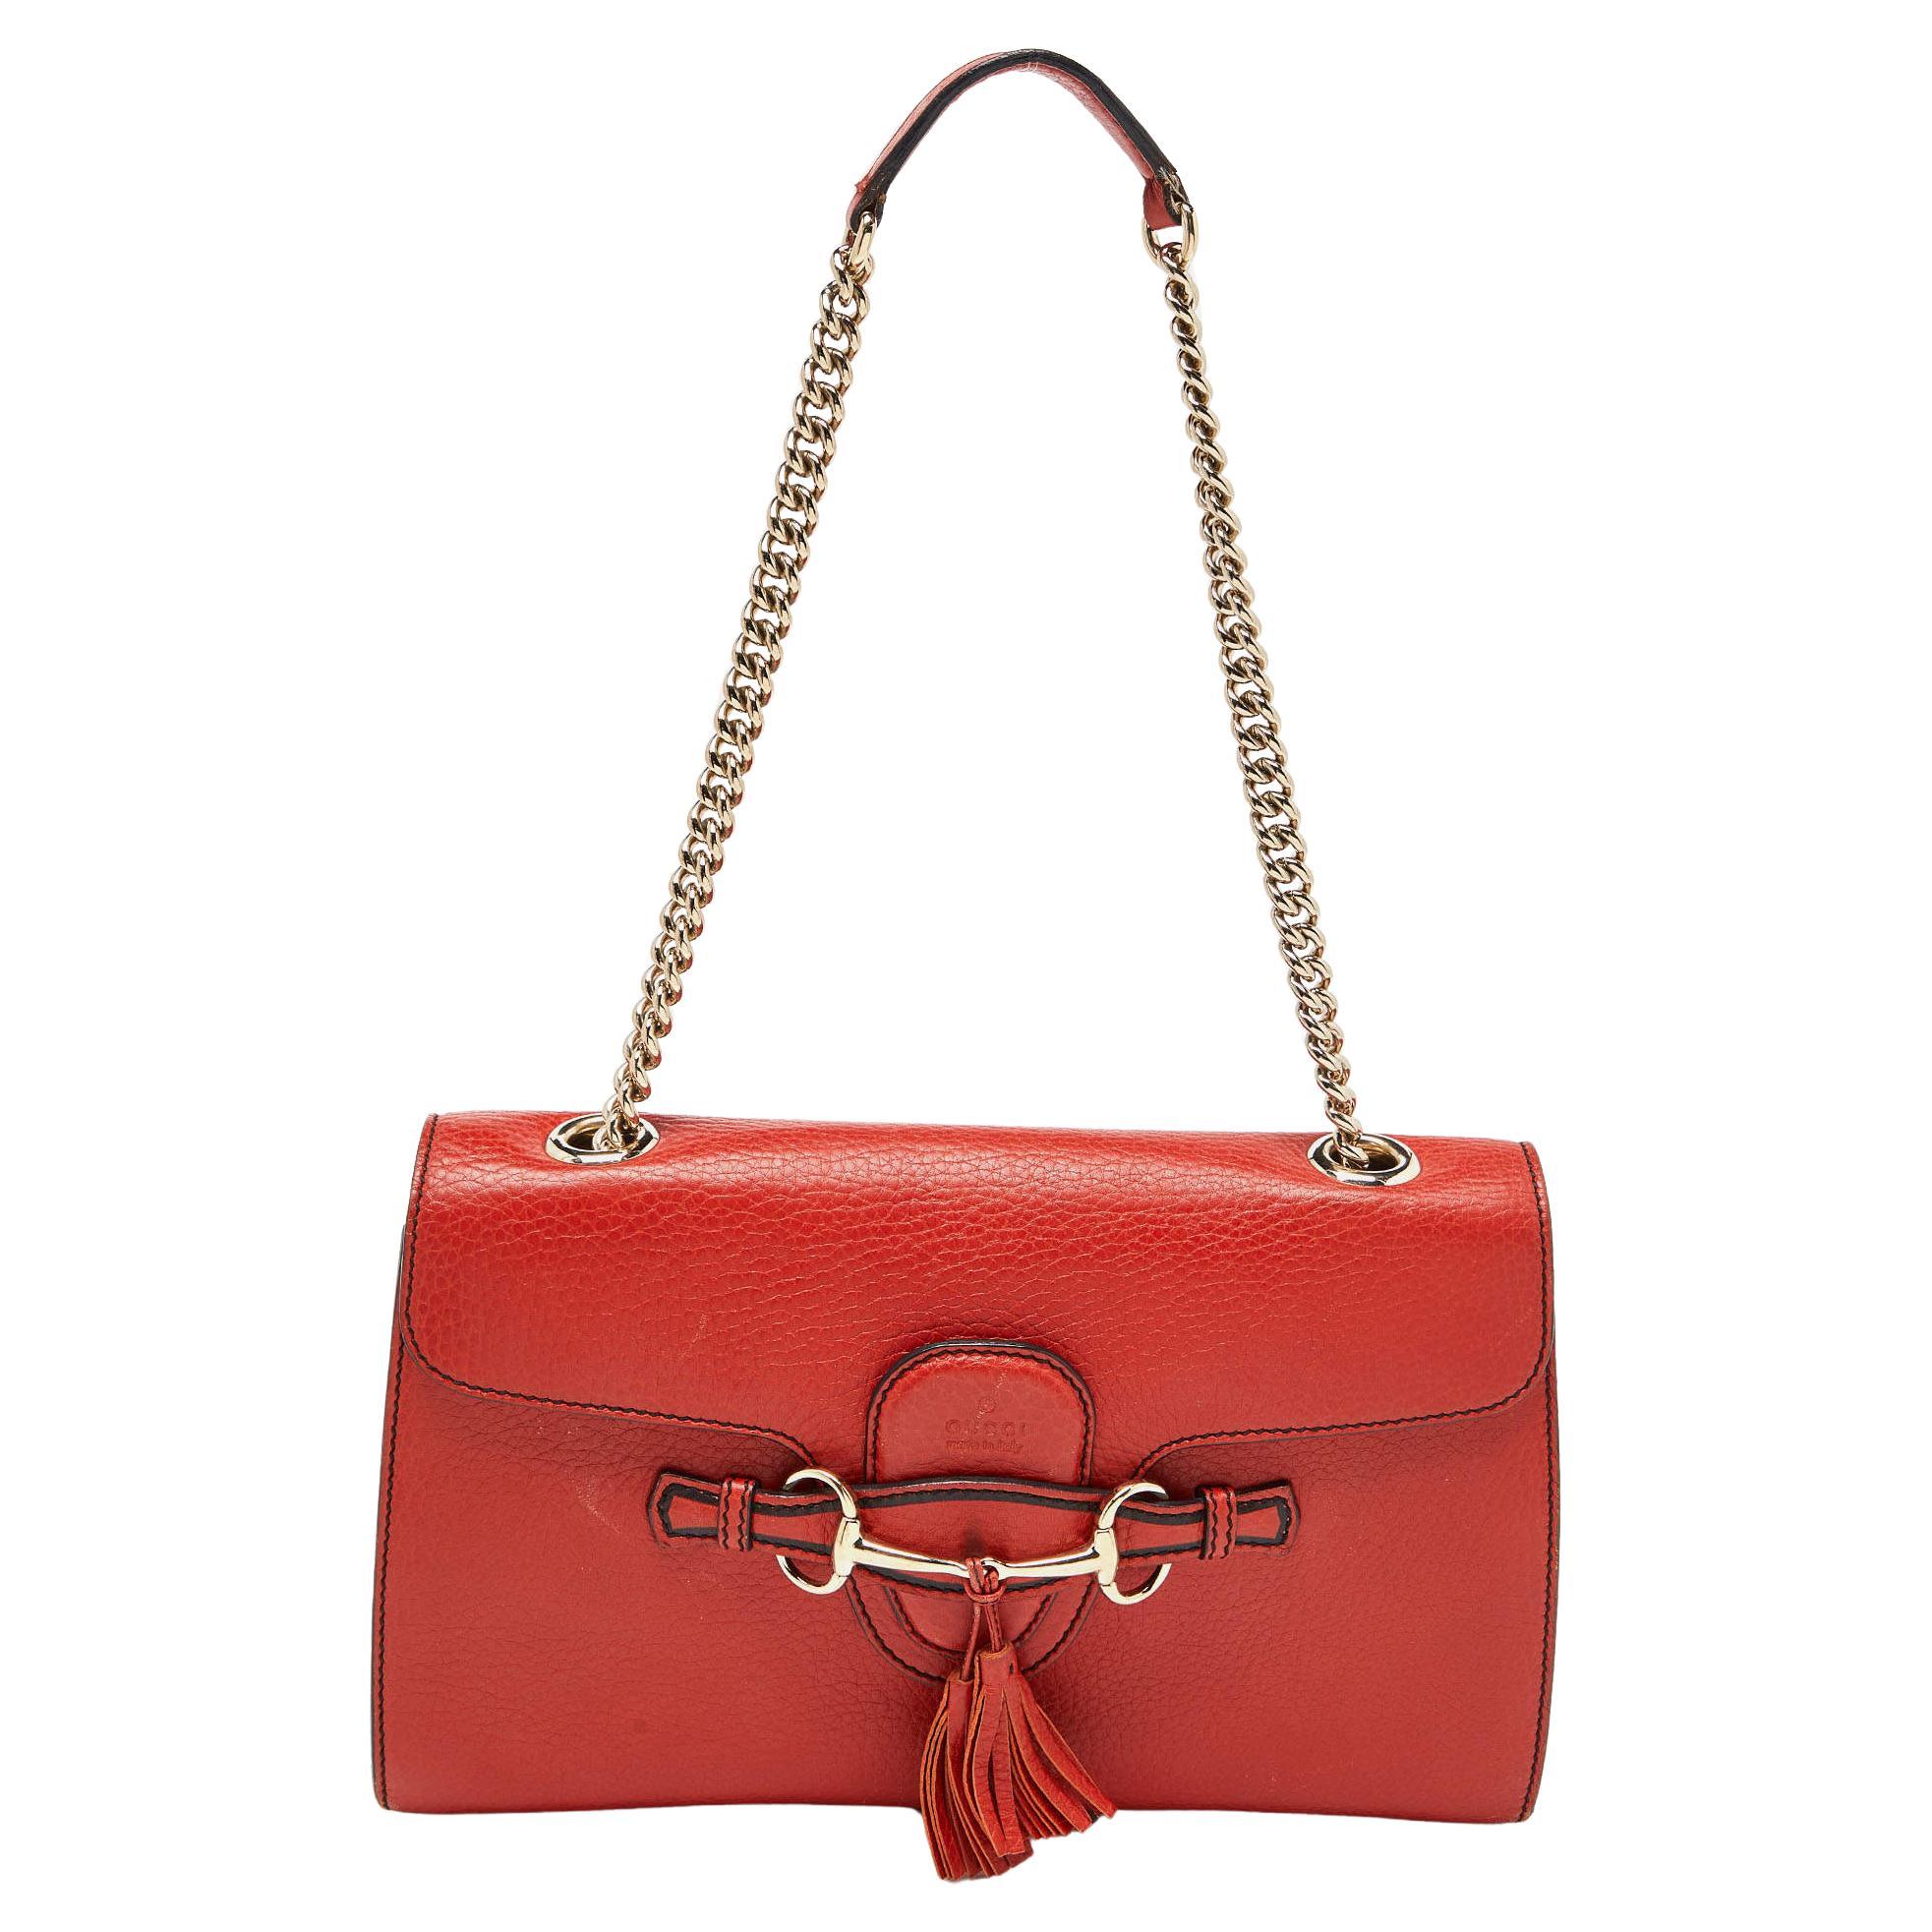 Gucci Coral Red Leather Medium Emily Shoulder Bag